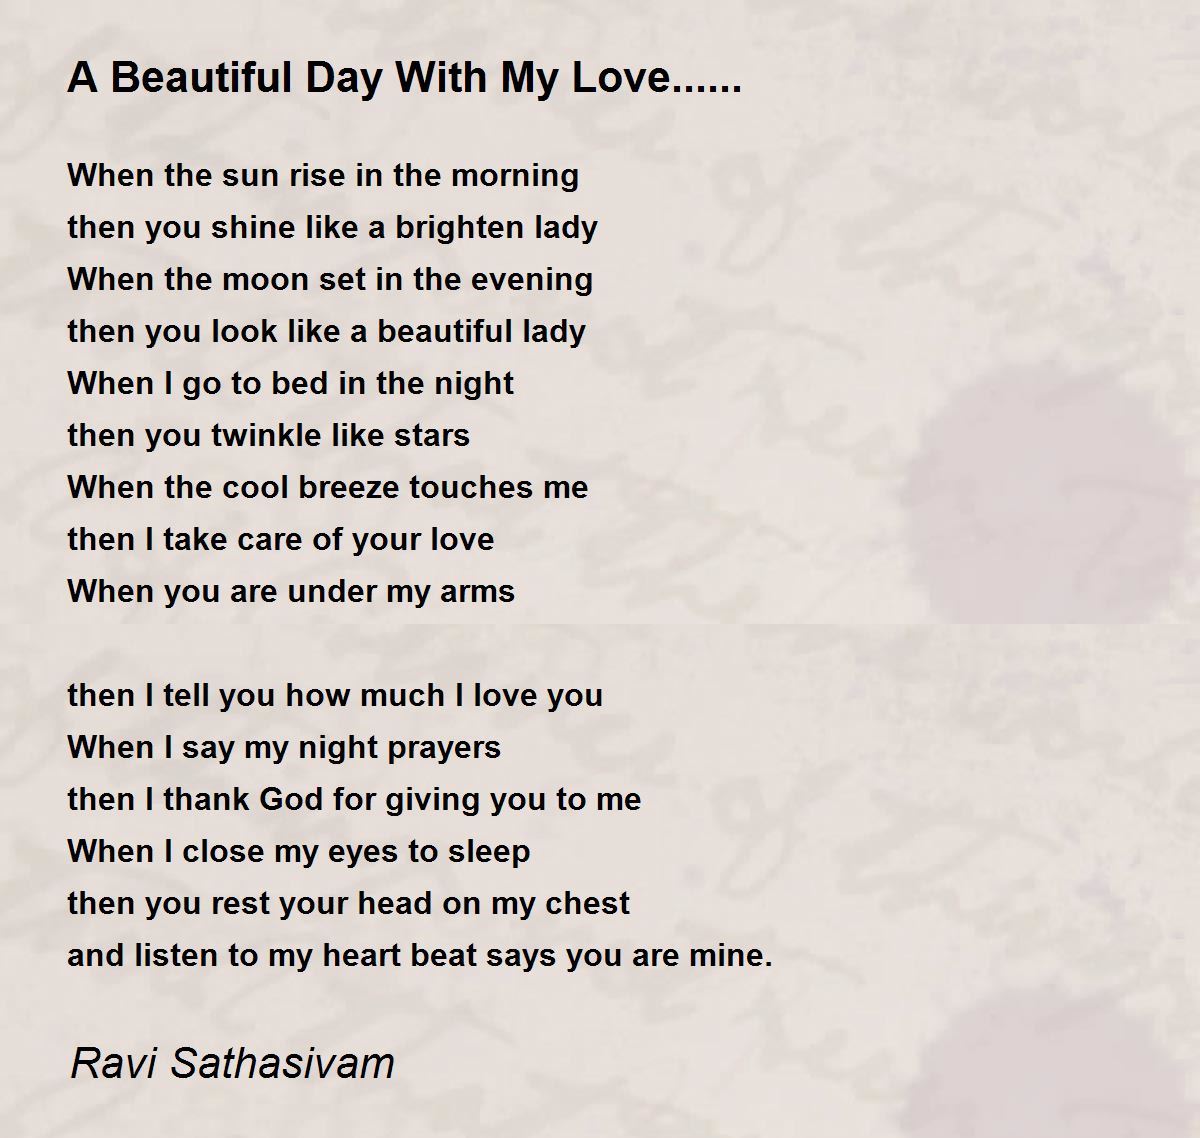 A beautiful love poem